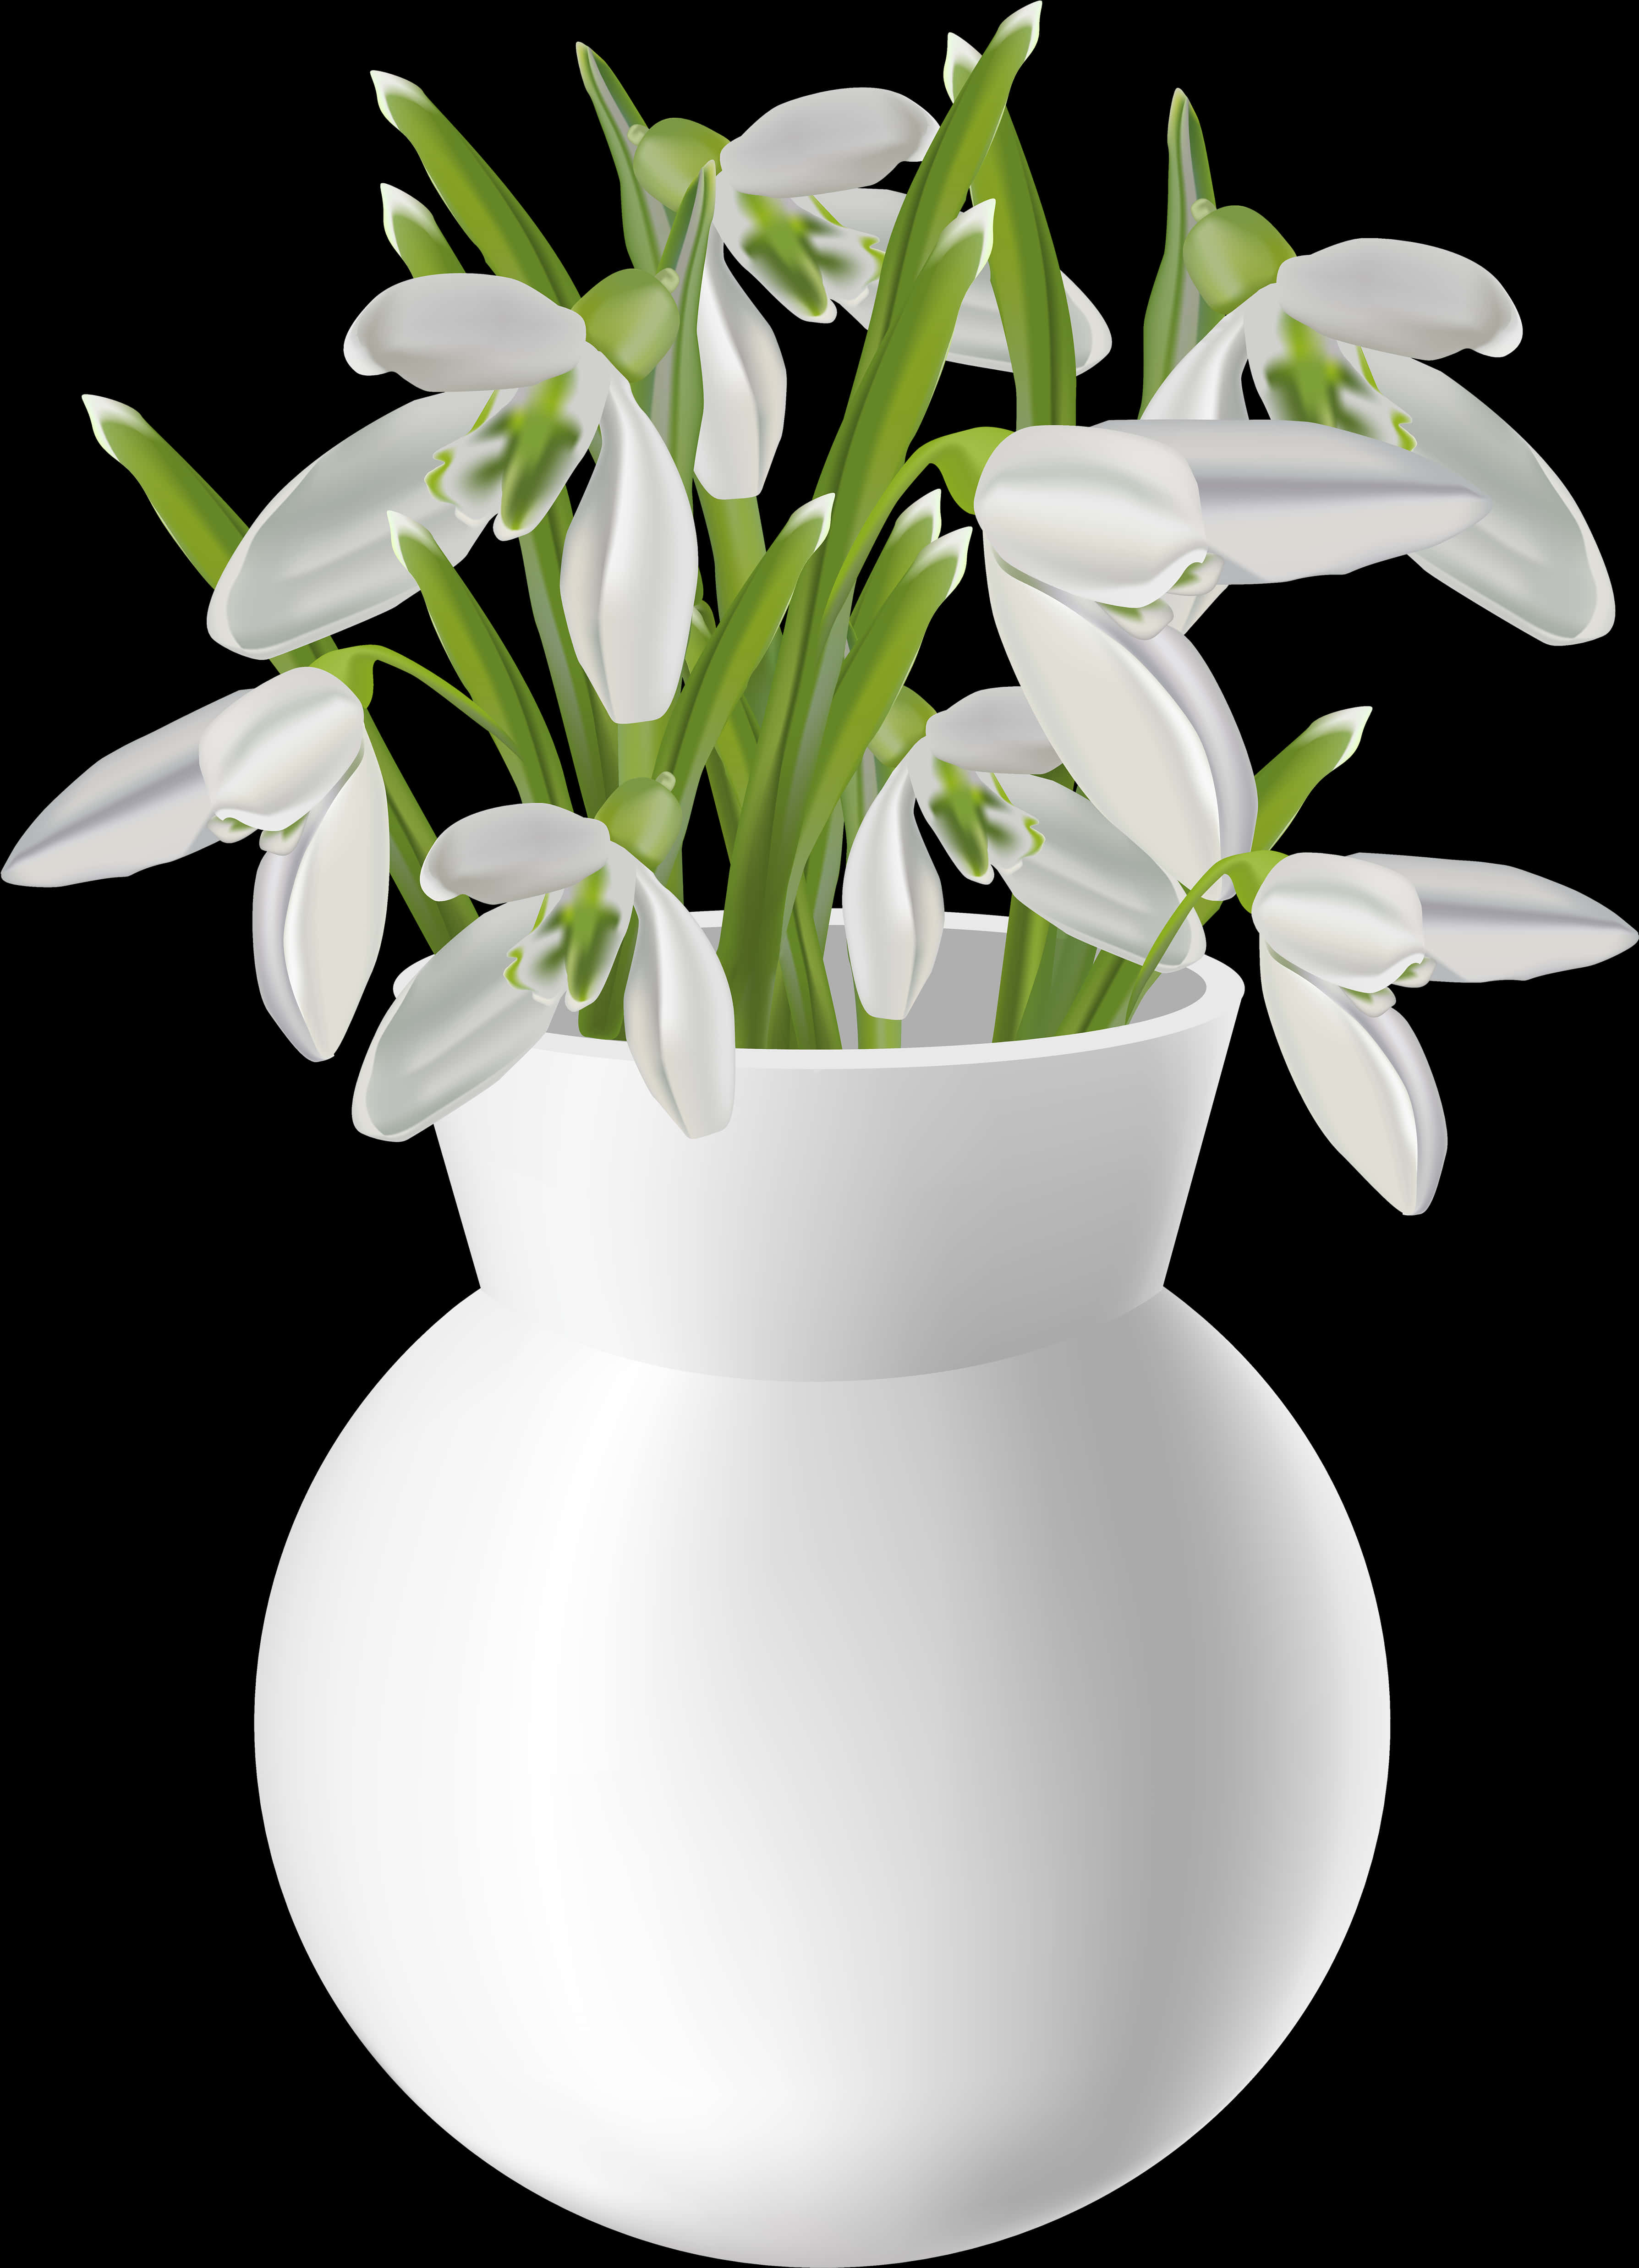 White Snowdropsin Vase Illustration